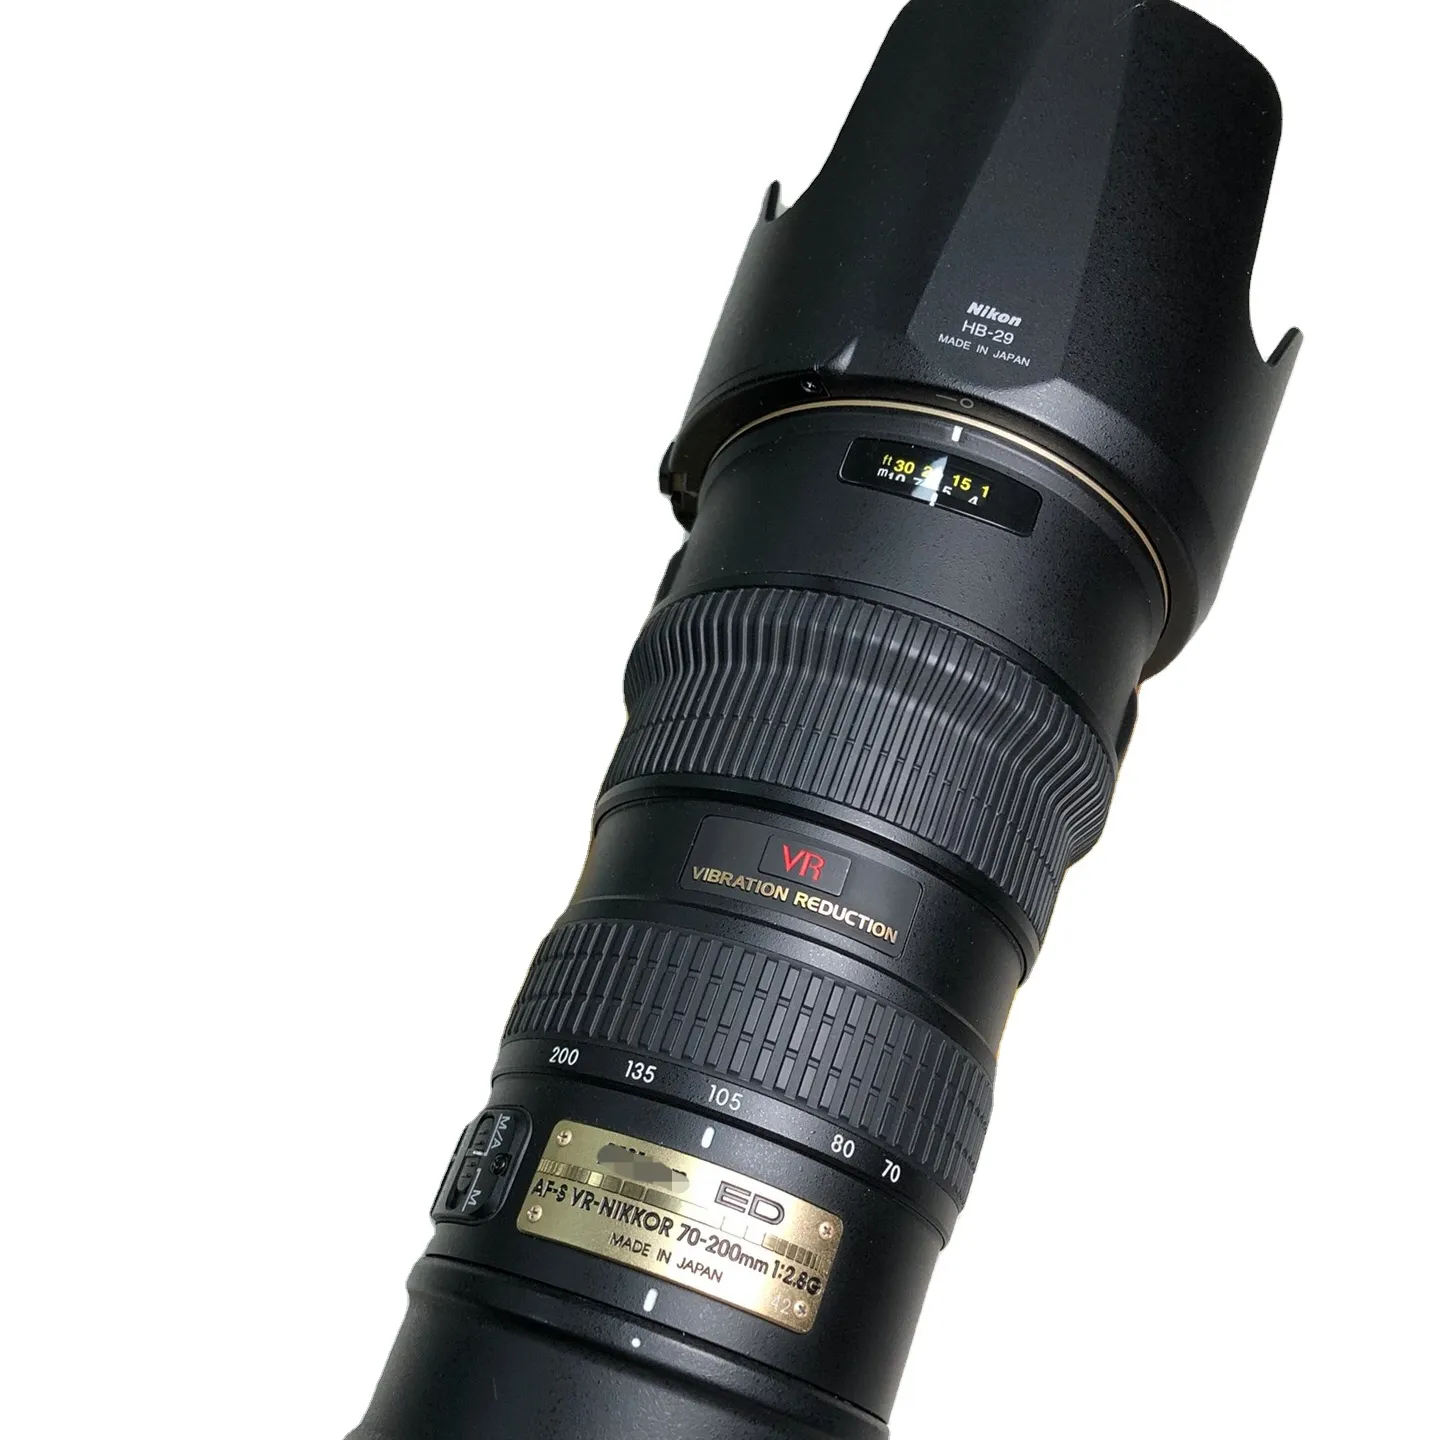 Lensa Kamera digital telefoto, af-s 70-200mm f/2.8 ED lensa zoom vrtelefoto asli digunakan